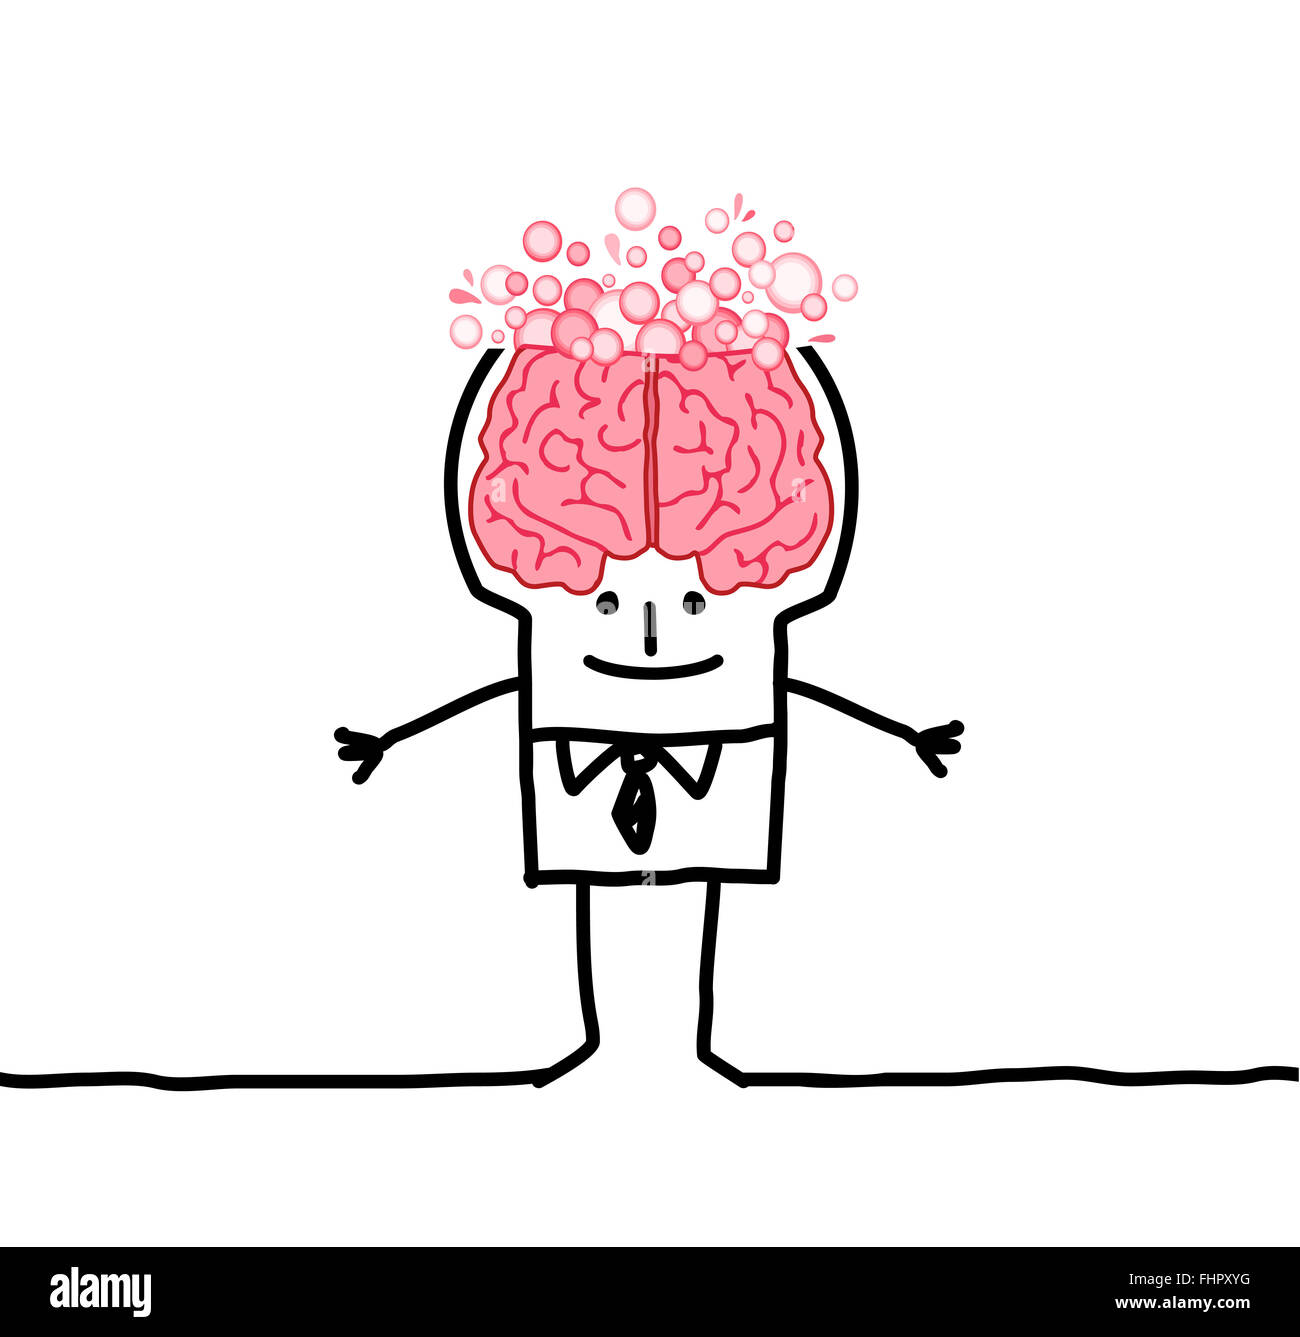 big brain cartoon character